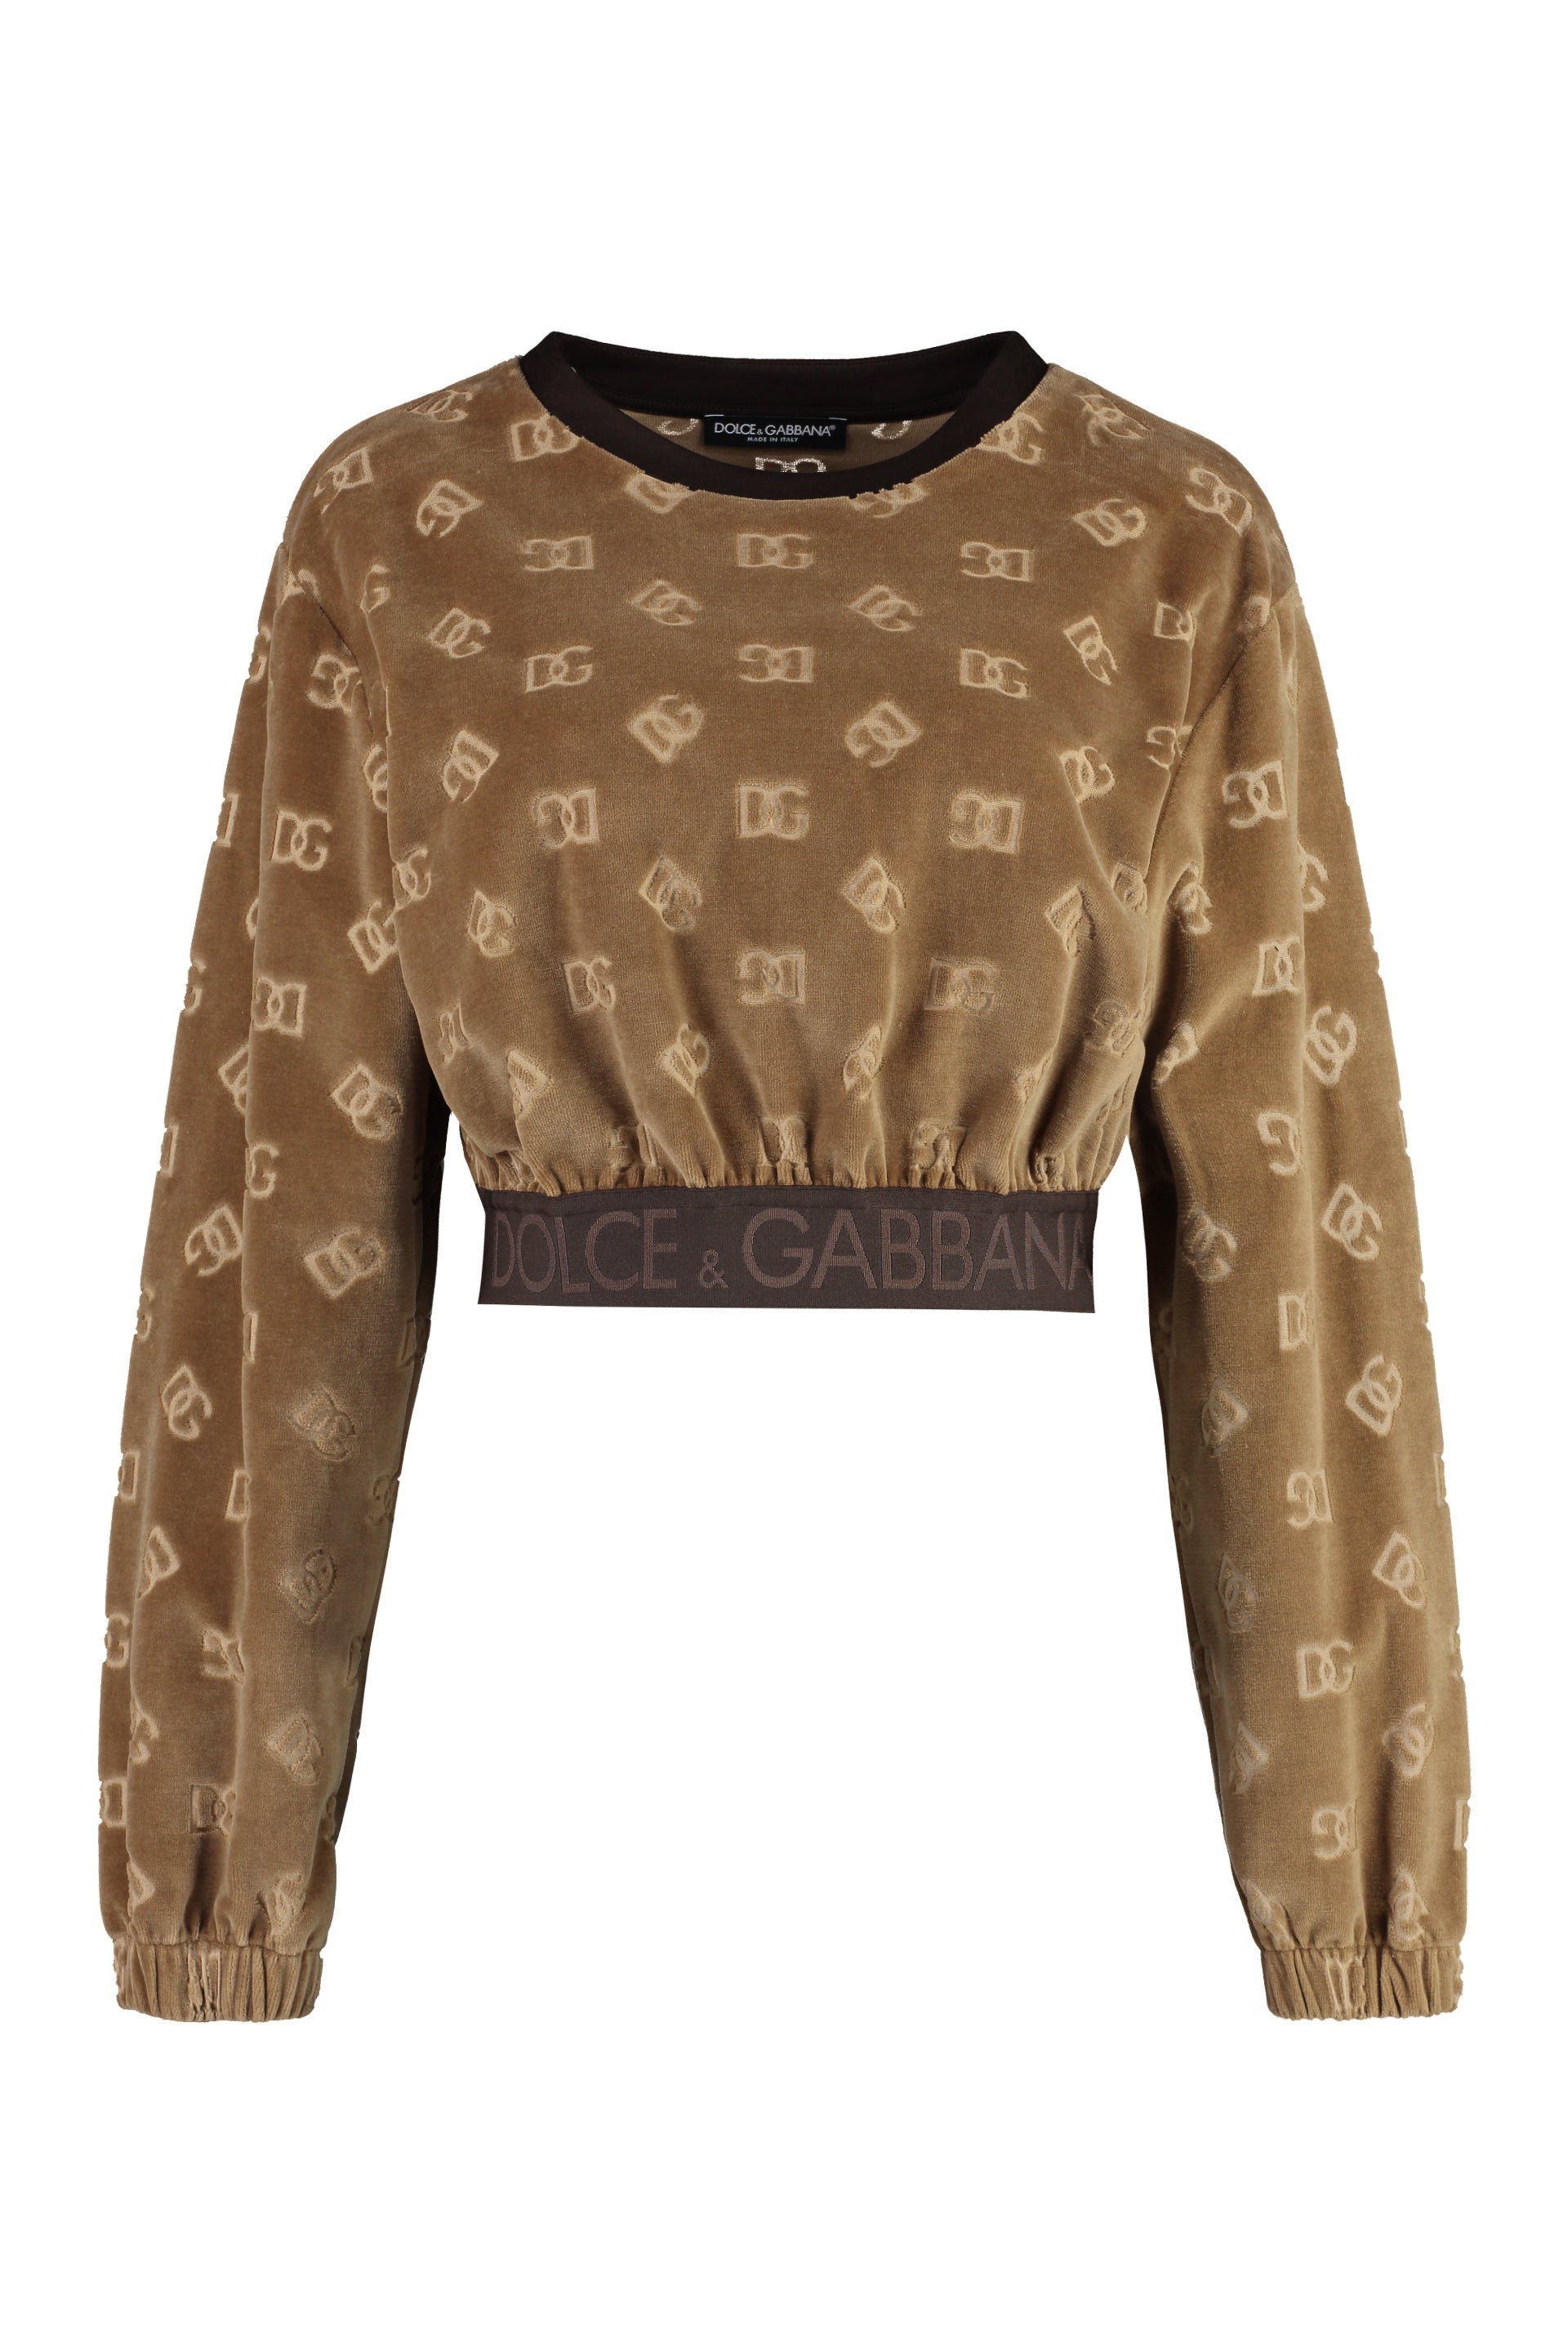 Shop Dolce & Gabbana All-over Jacquard Logo Sweatshirt For Women In Camel